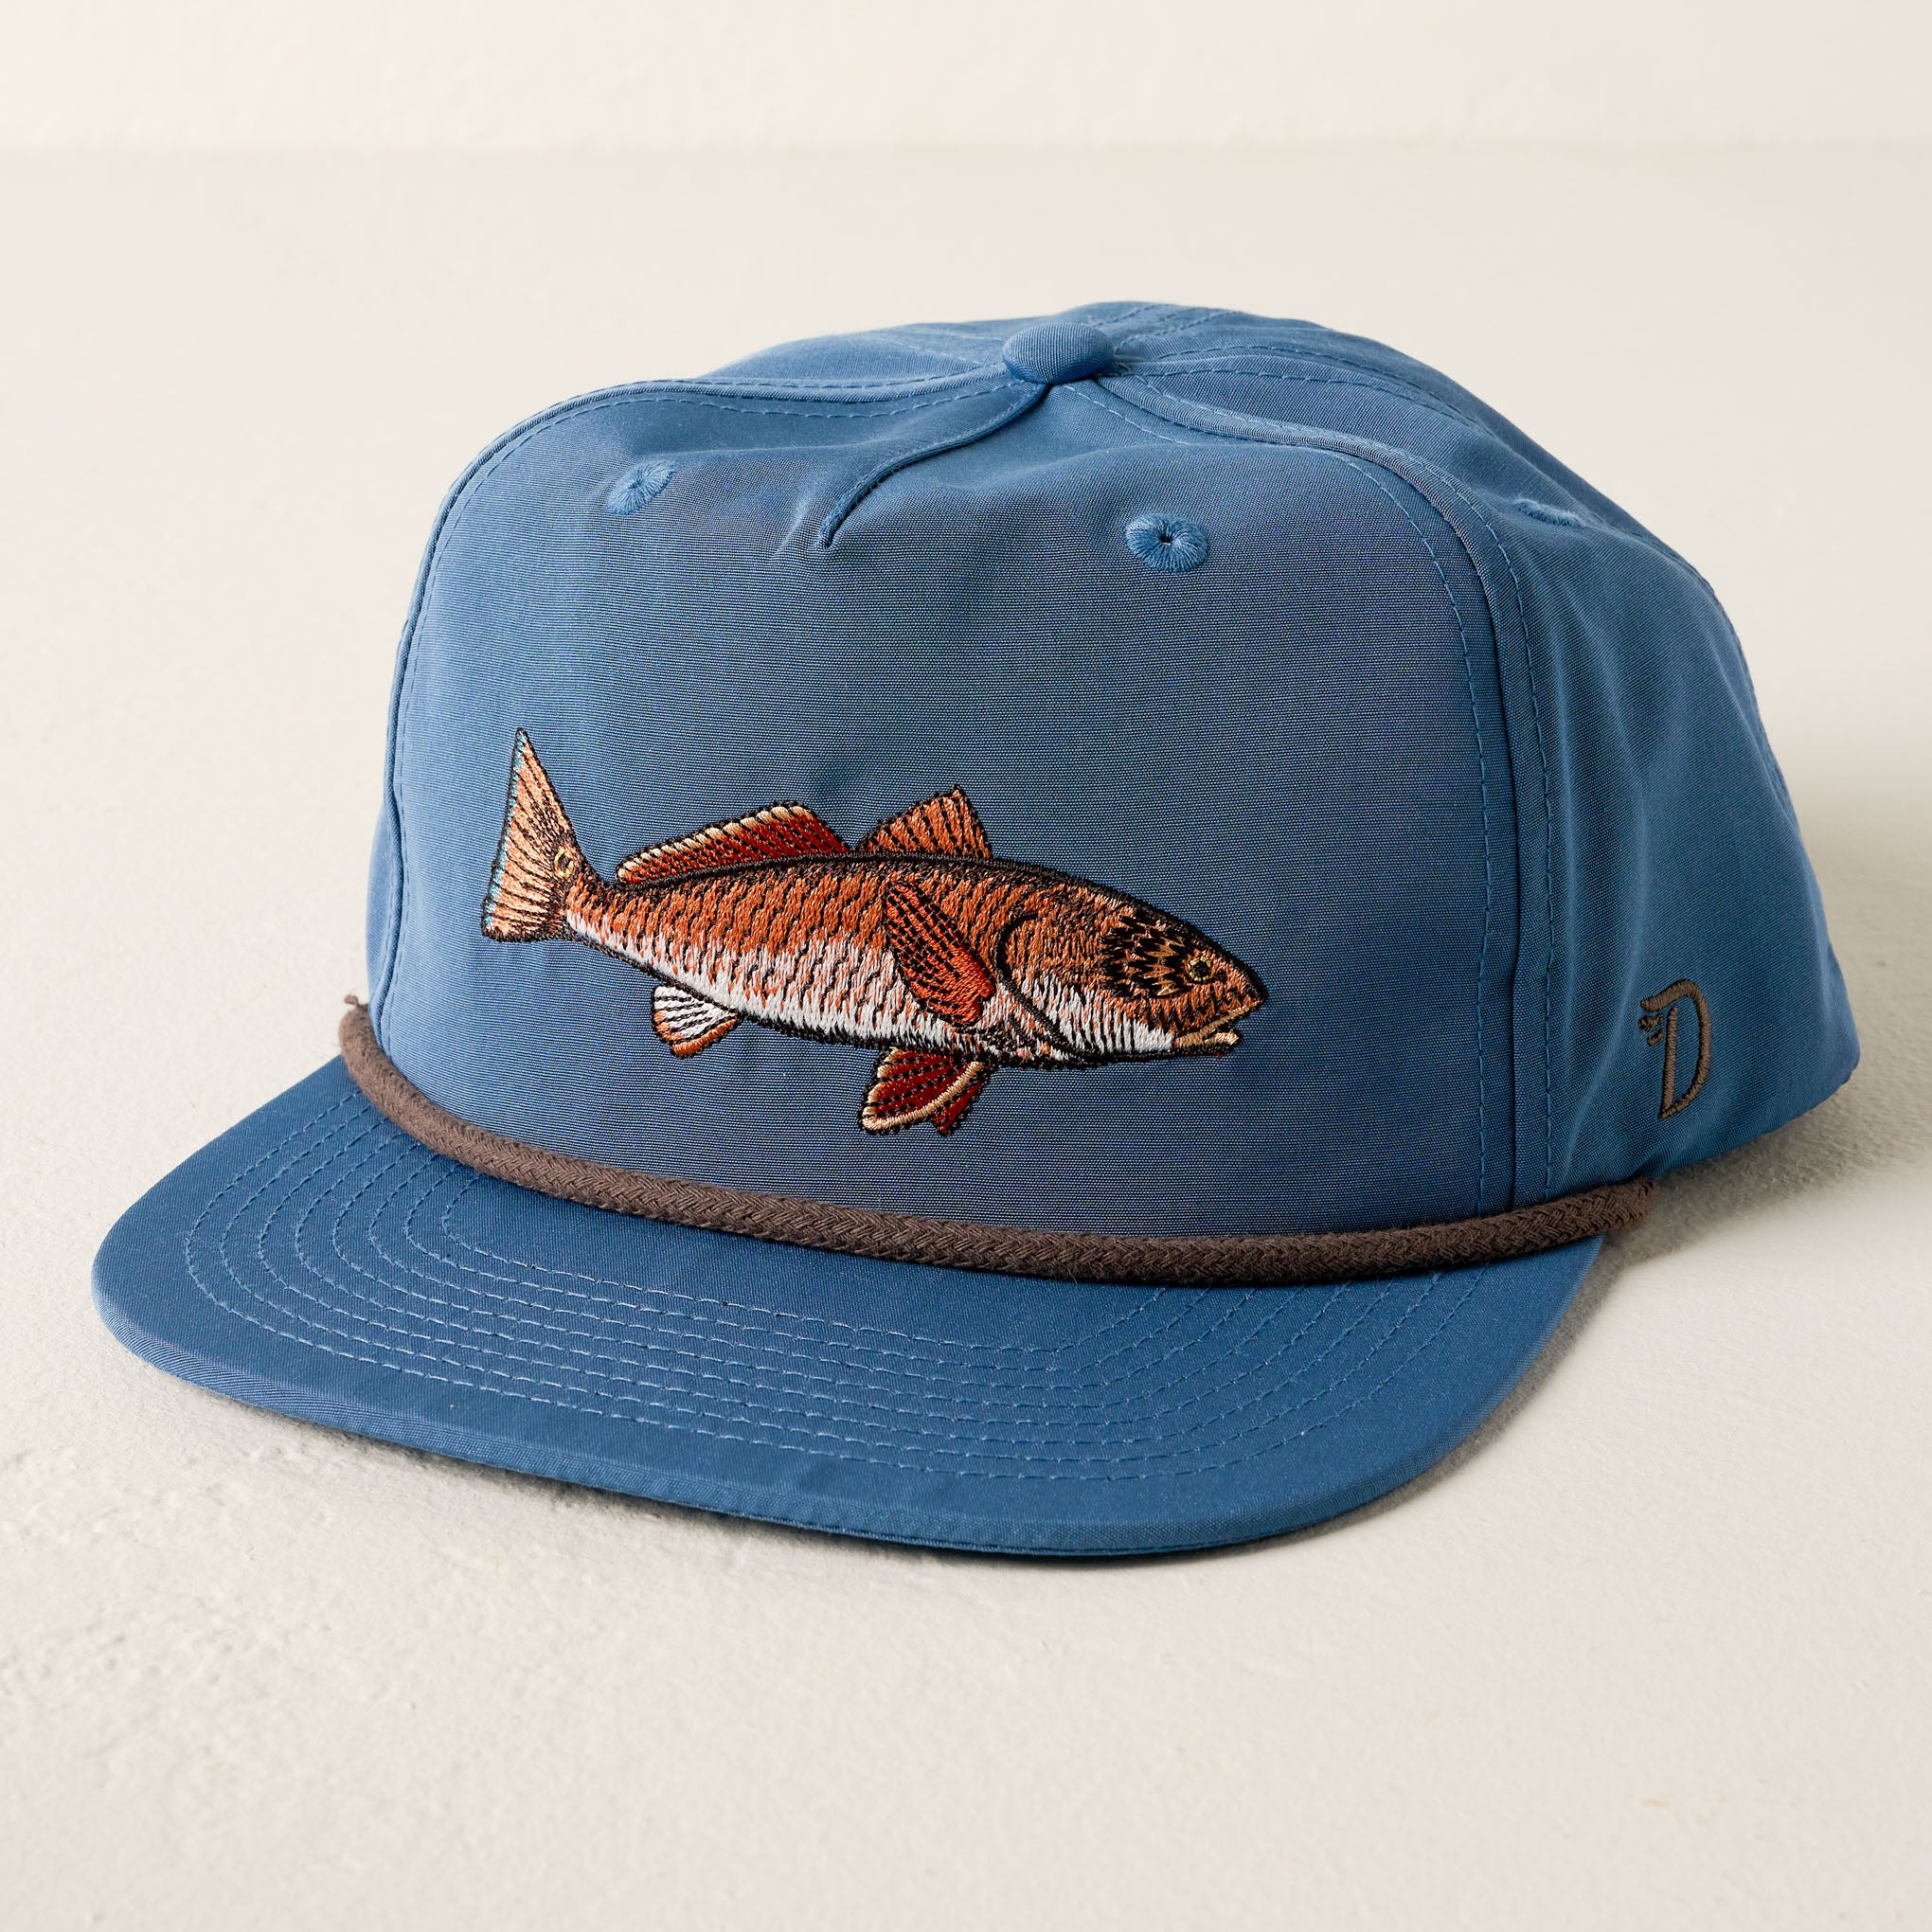 Redfish Hat $34.00